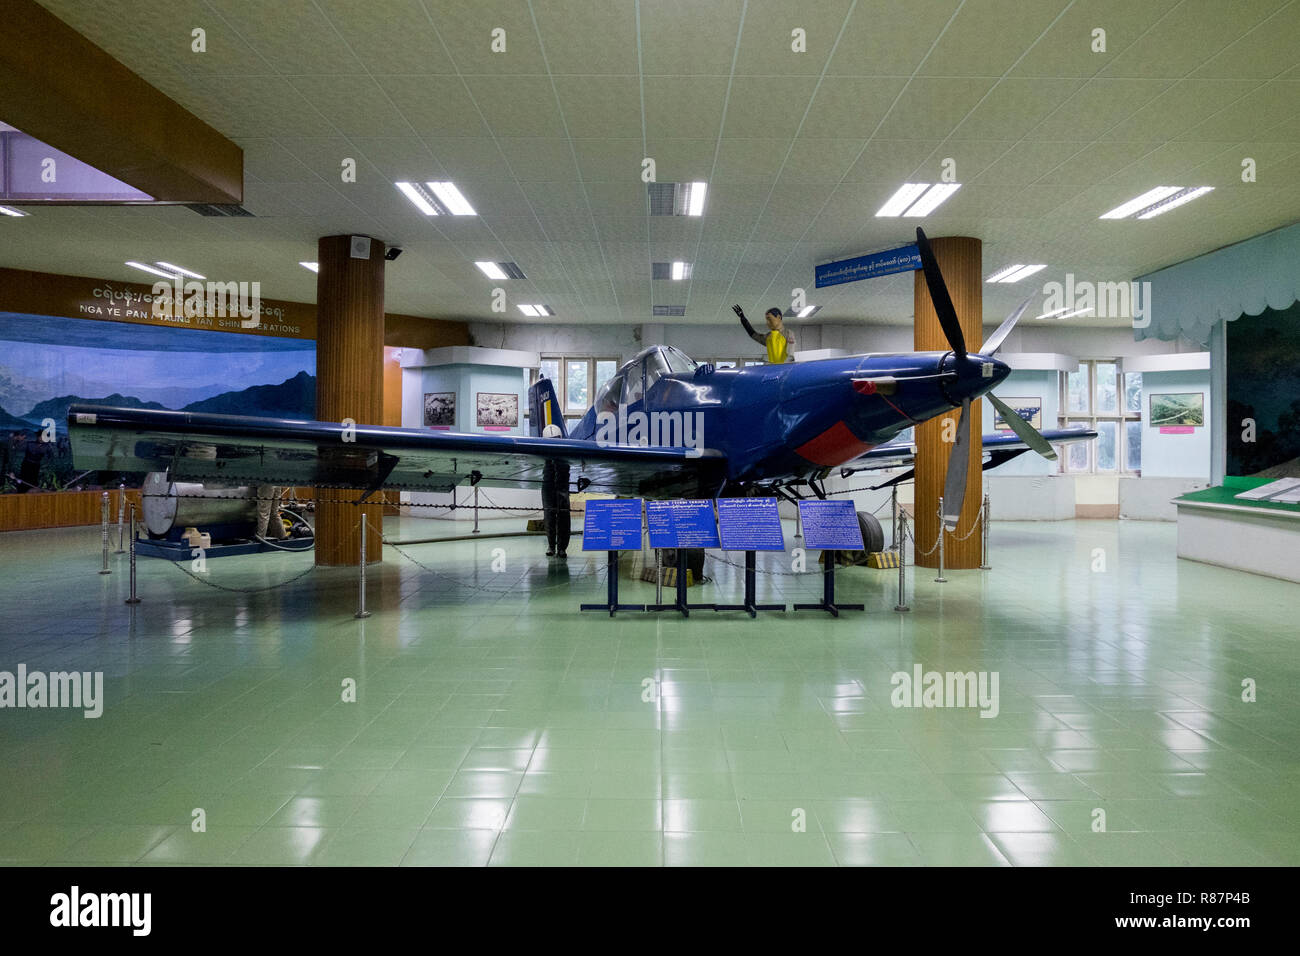 Blue drug plane at the Drug Elimination Museum in Yangon, Myanmar. Stock Photo